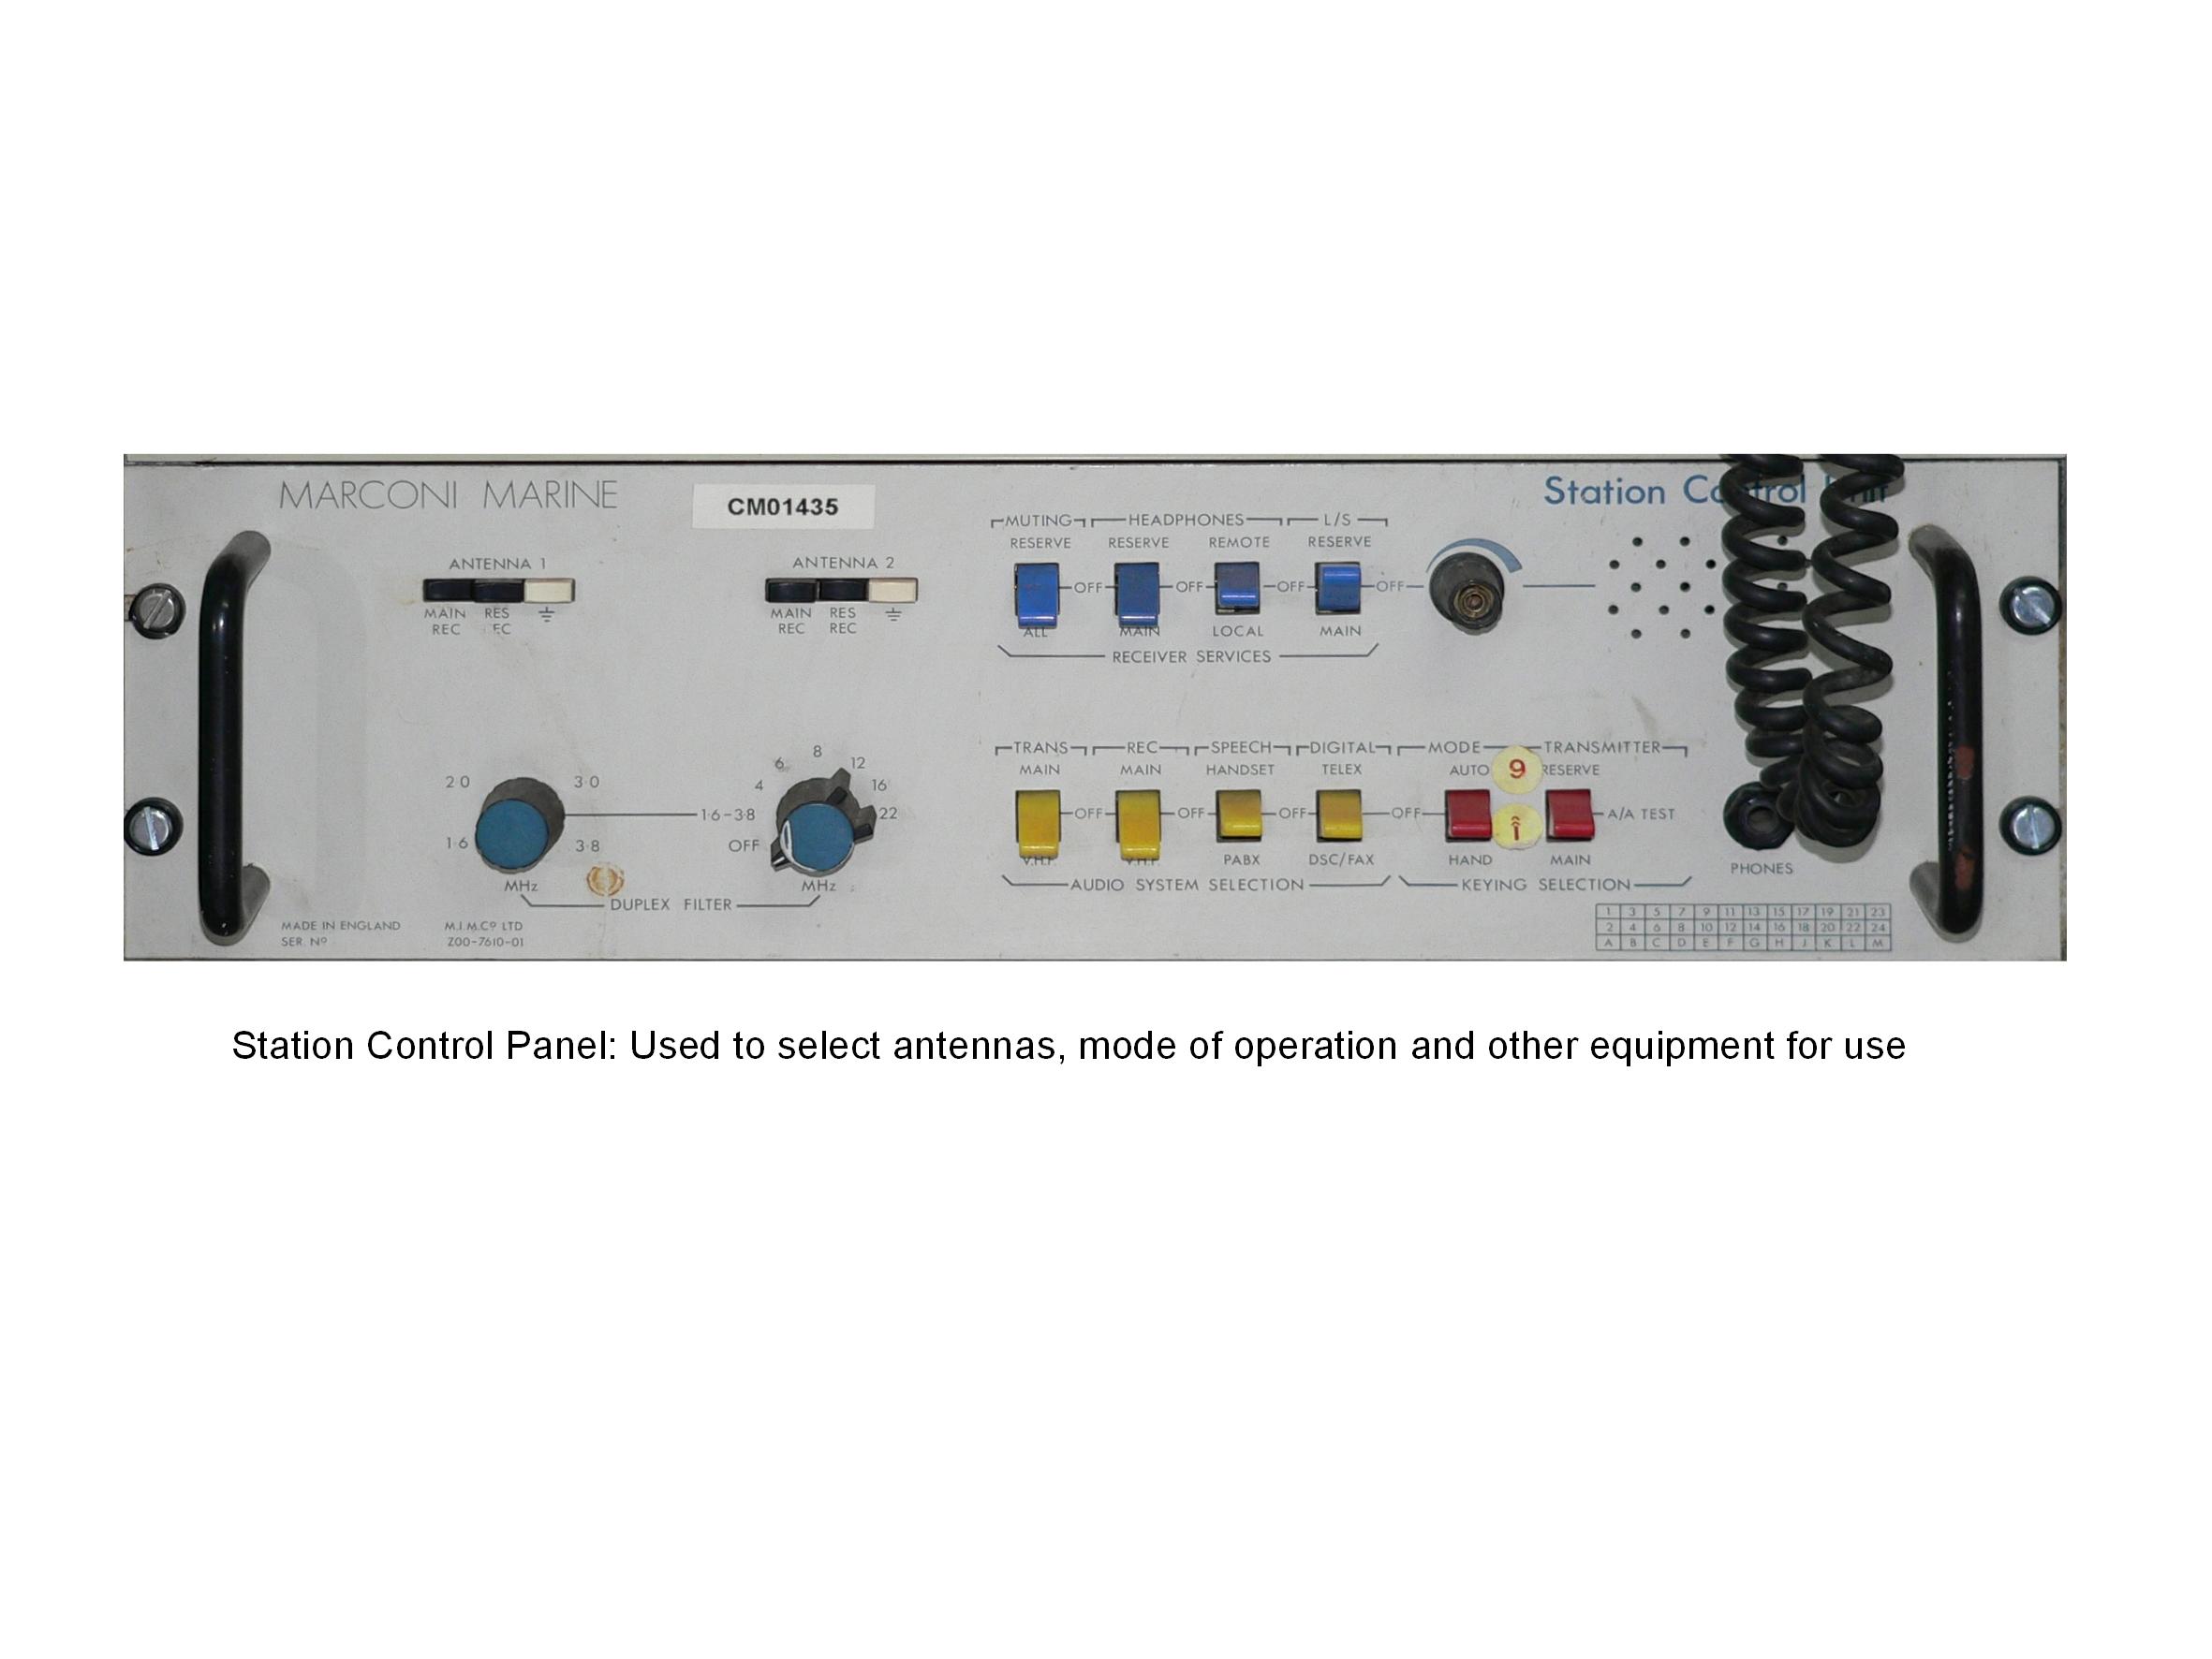 Station Control Panel